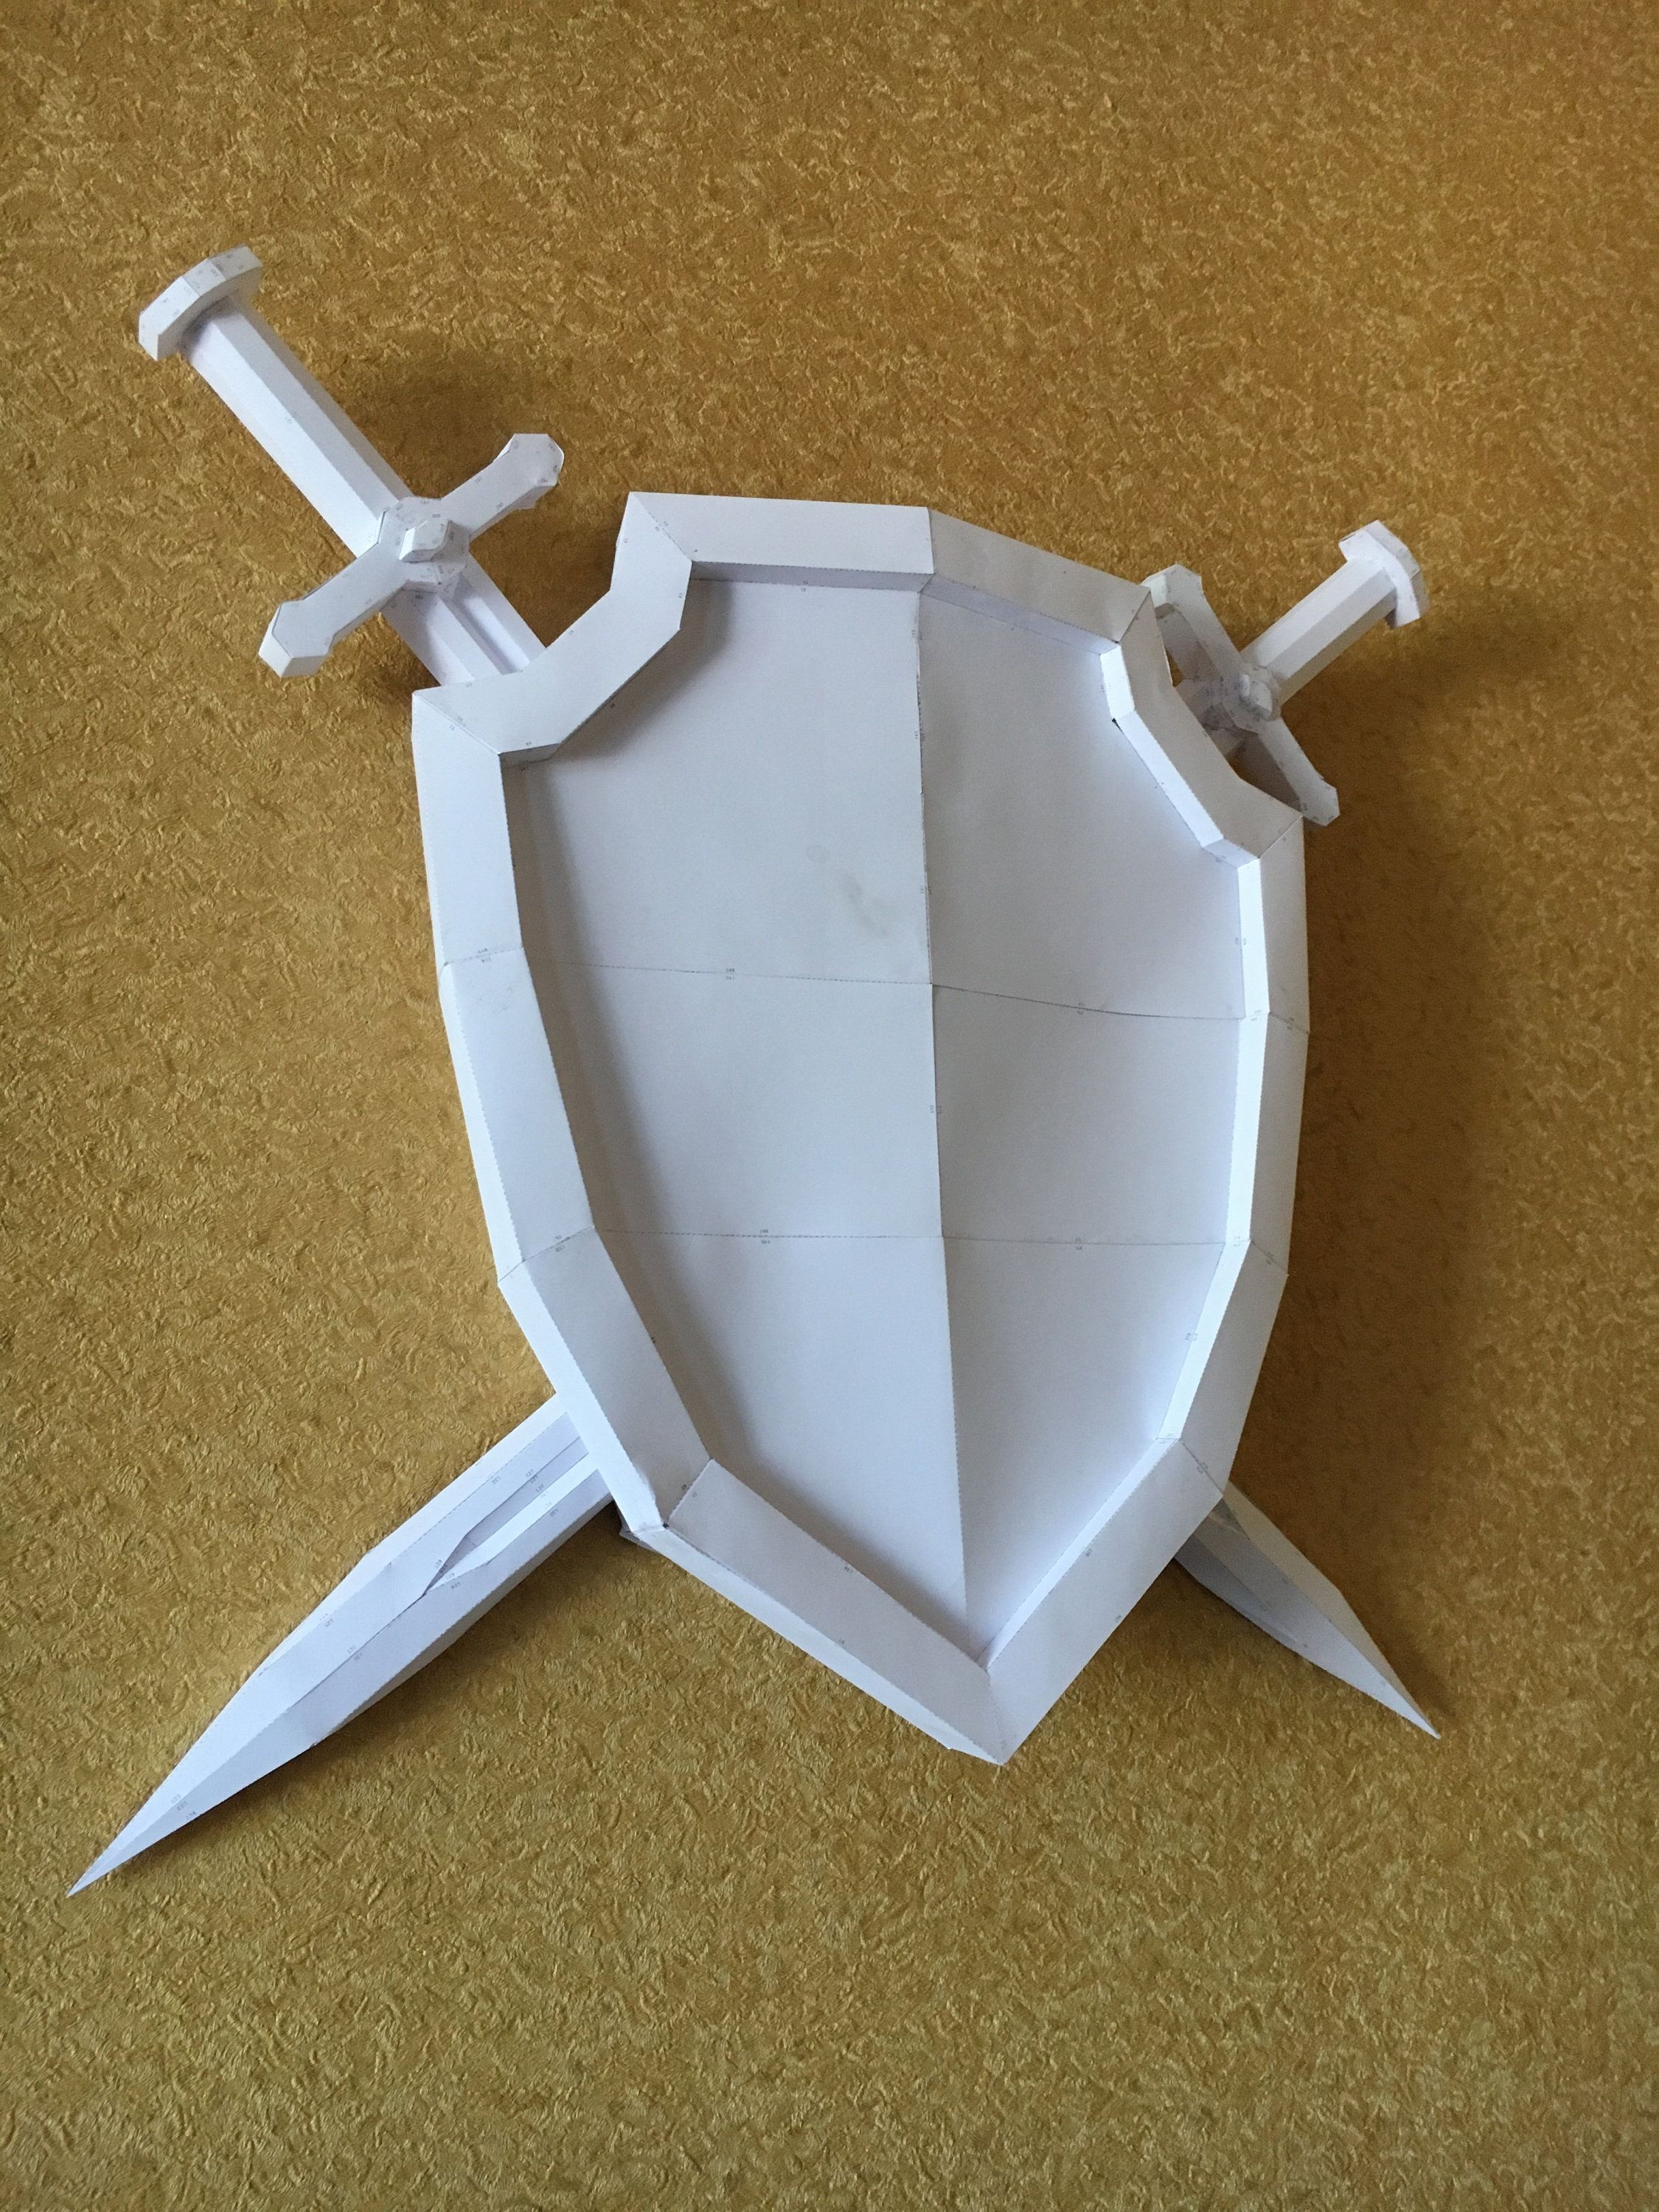 Bunny Papercraft Sword Shield Diy Papercraft Model ÐÑÐ¼Ð°Ð¶Ð½ÑÐµ Ð¸Ð·Ð´ÐµÐ Ð¸Ñ